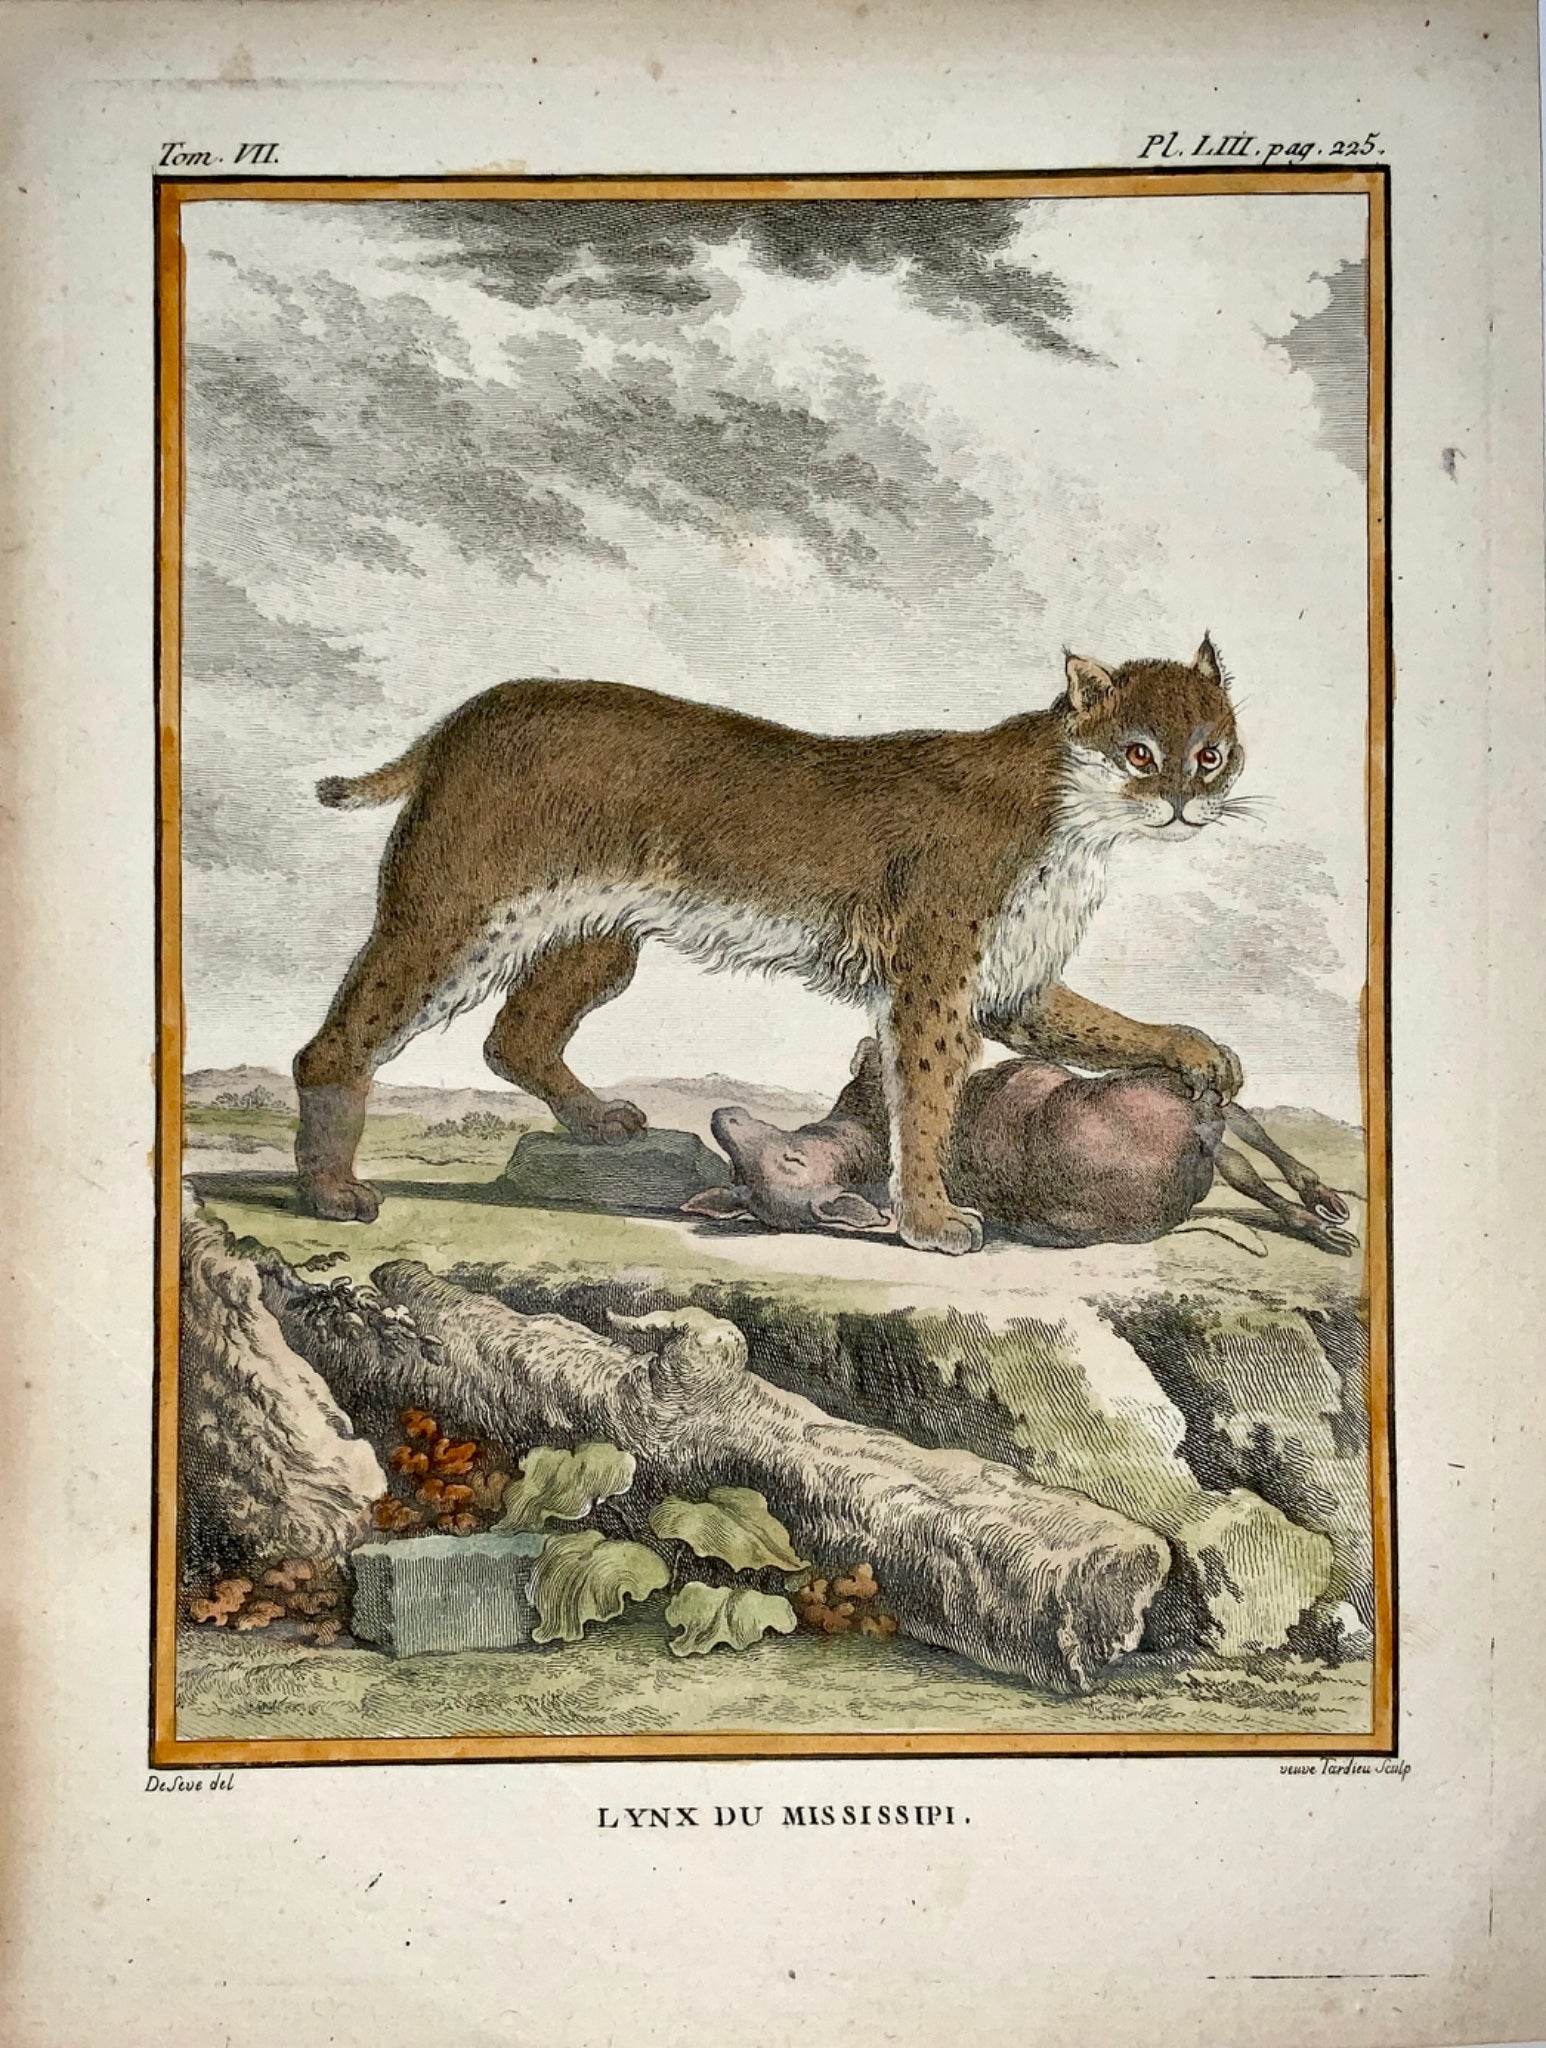 1766 De Seve - MISSISSIPI LYNX - large QUARTO edition handcol. engraving - Mammals